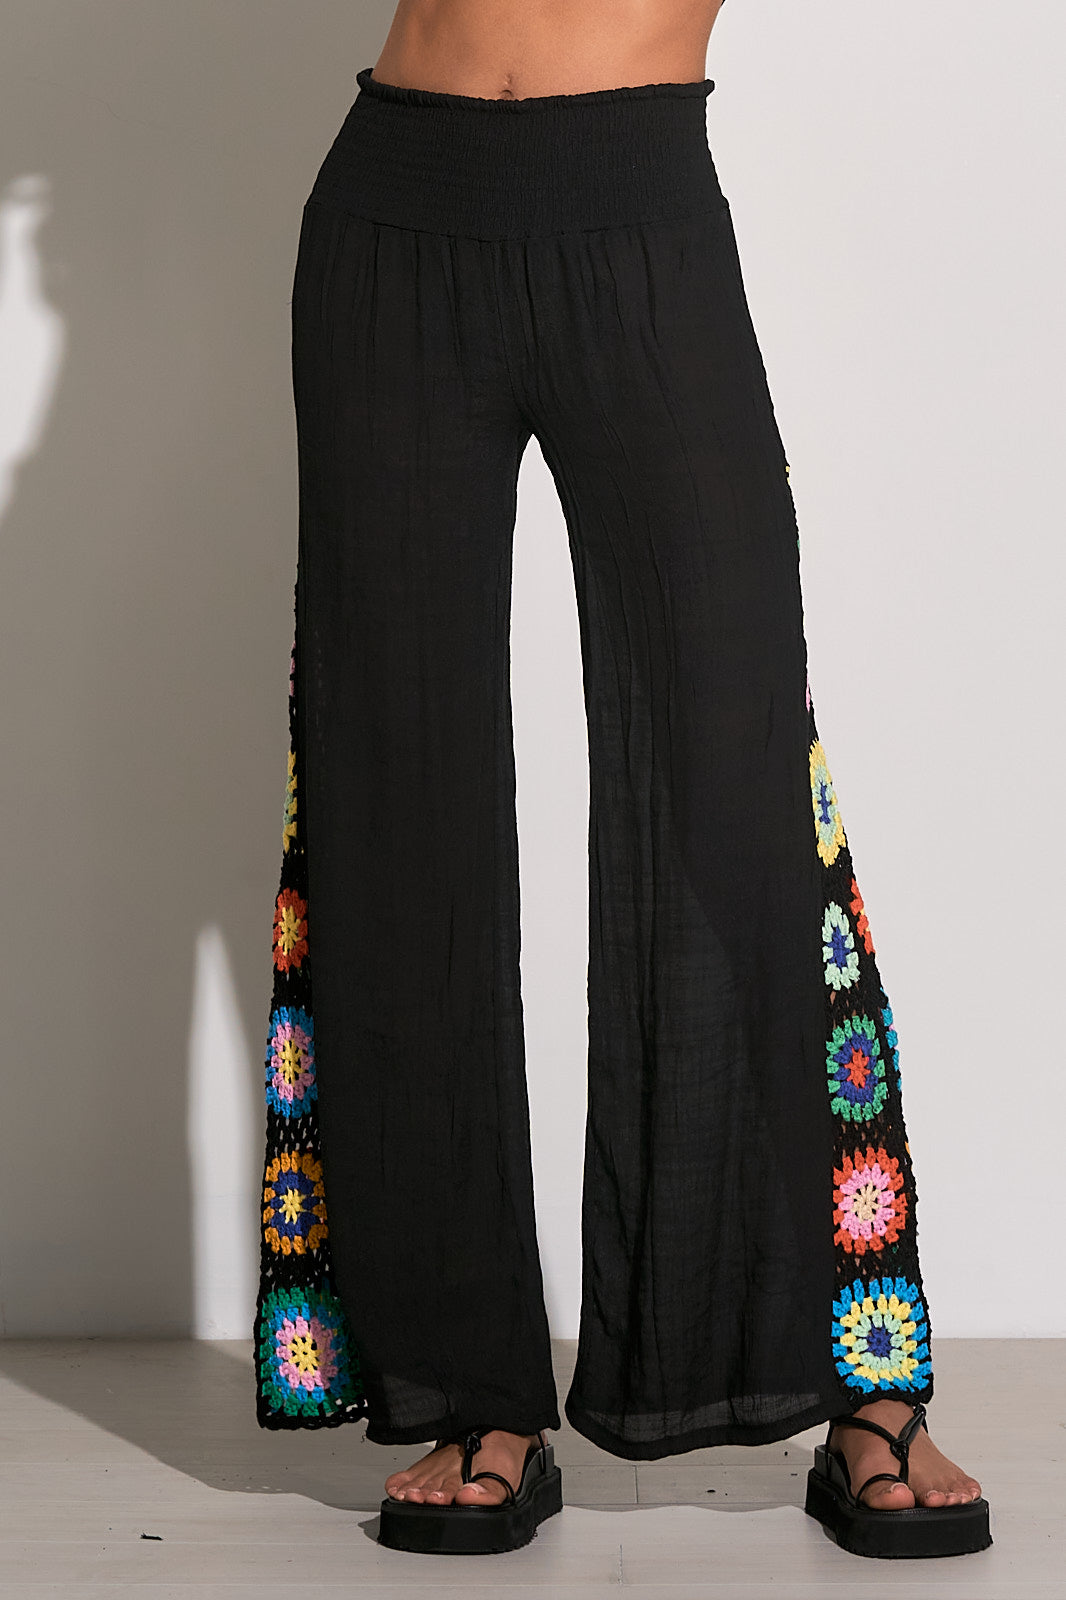 Elan Black Pants with Crocheted Insert